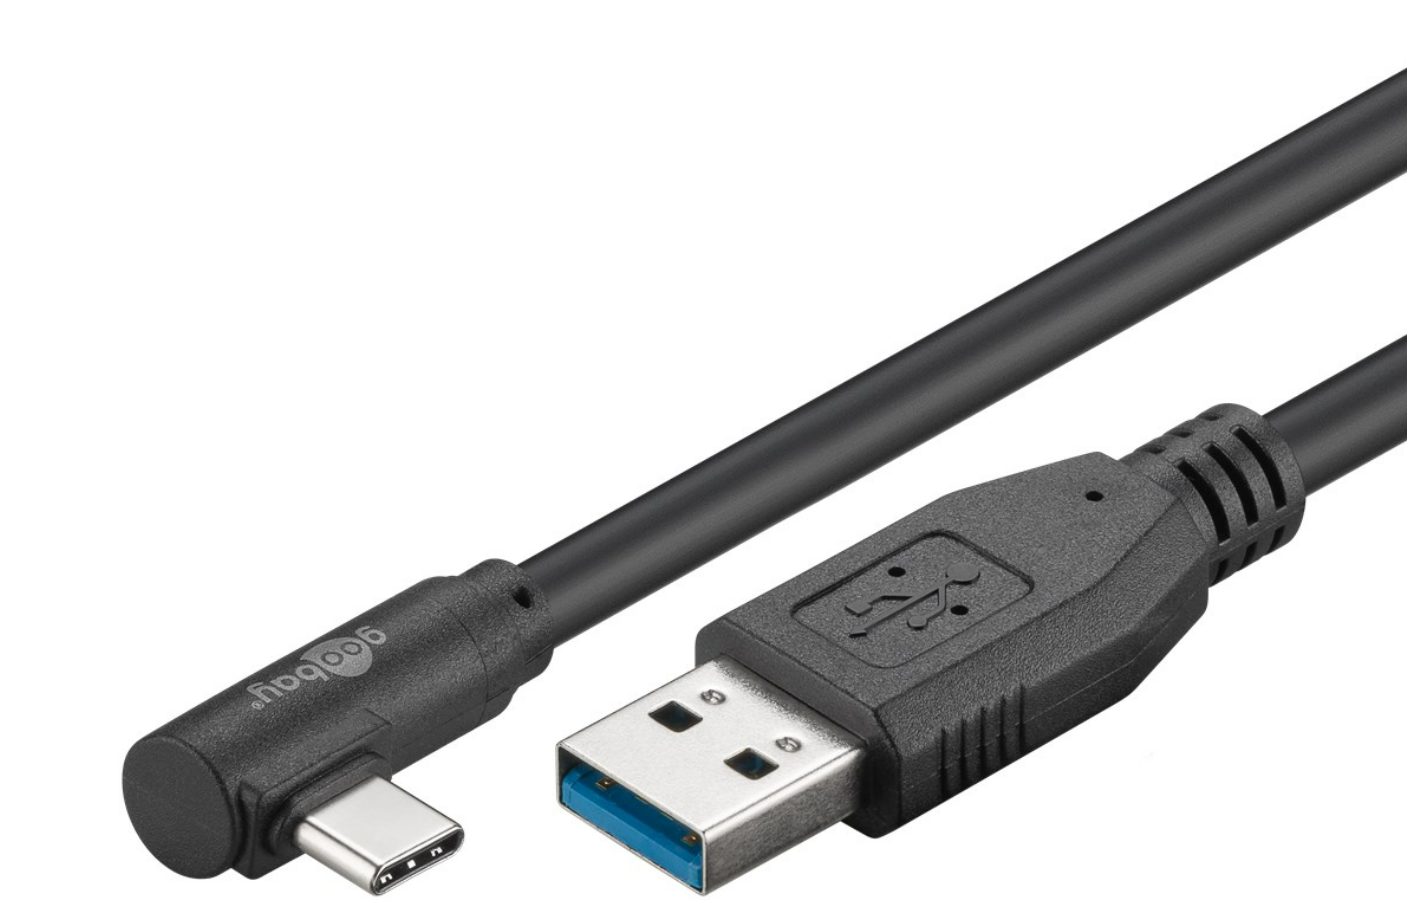 USB-C™ auf USB A 3.0 Kabel 90°, schwarz